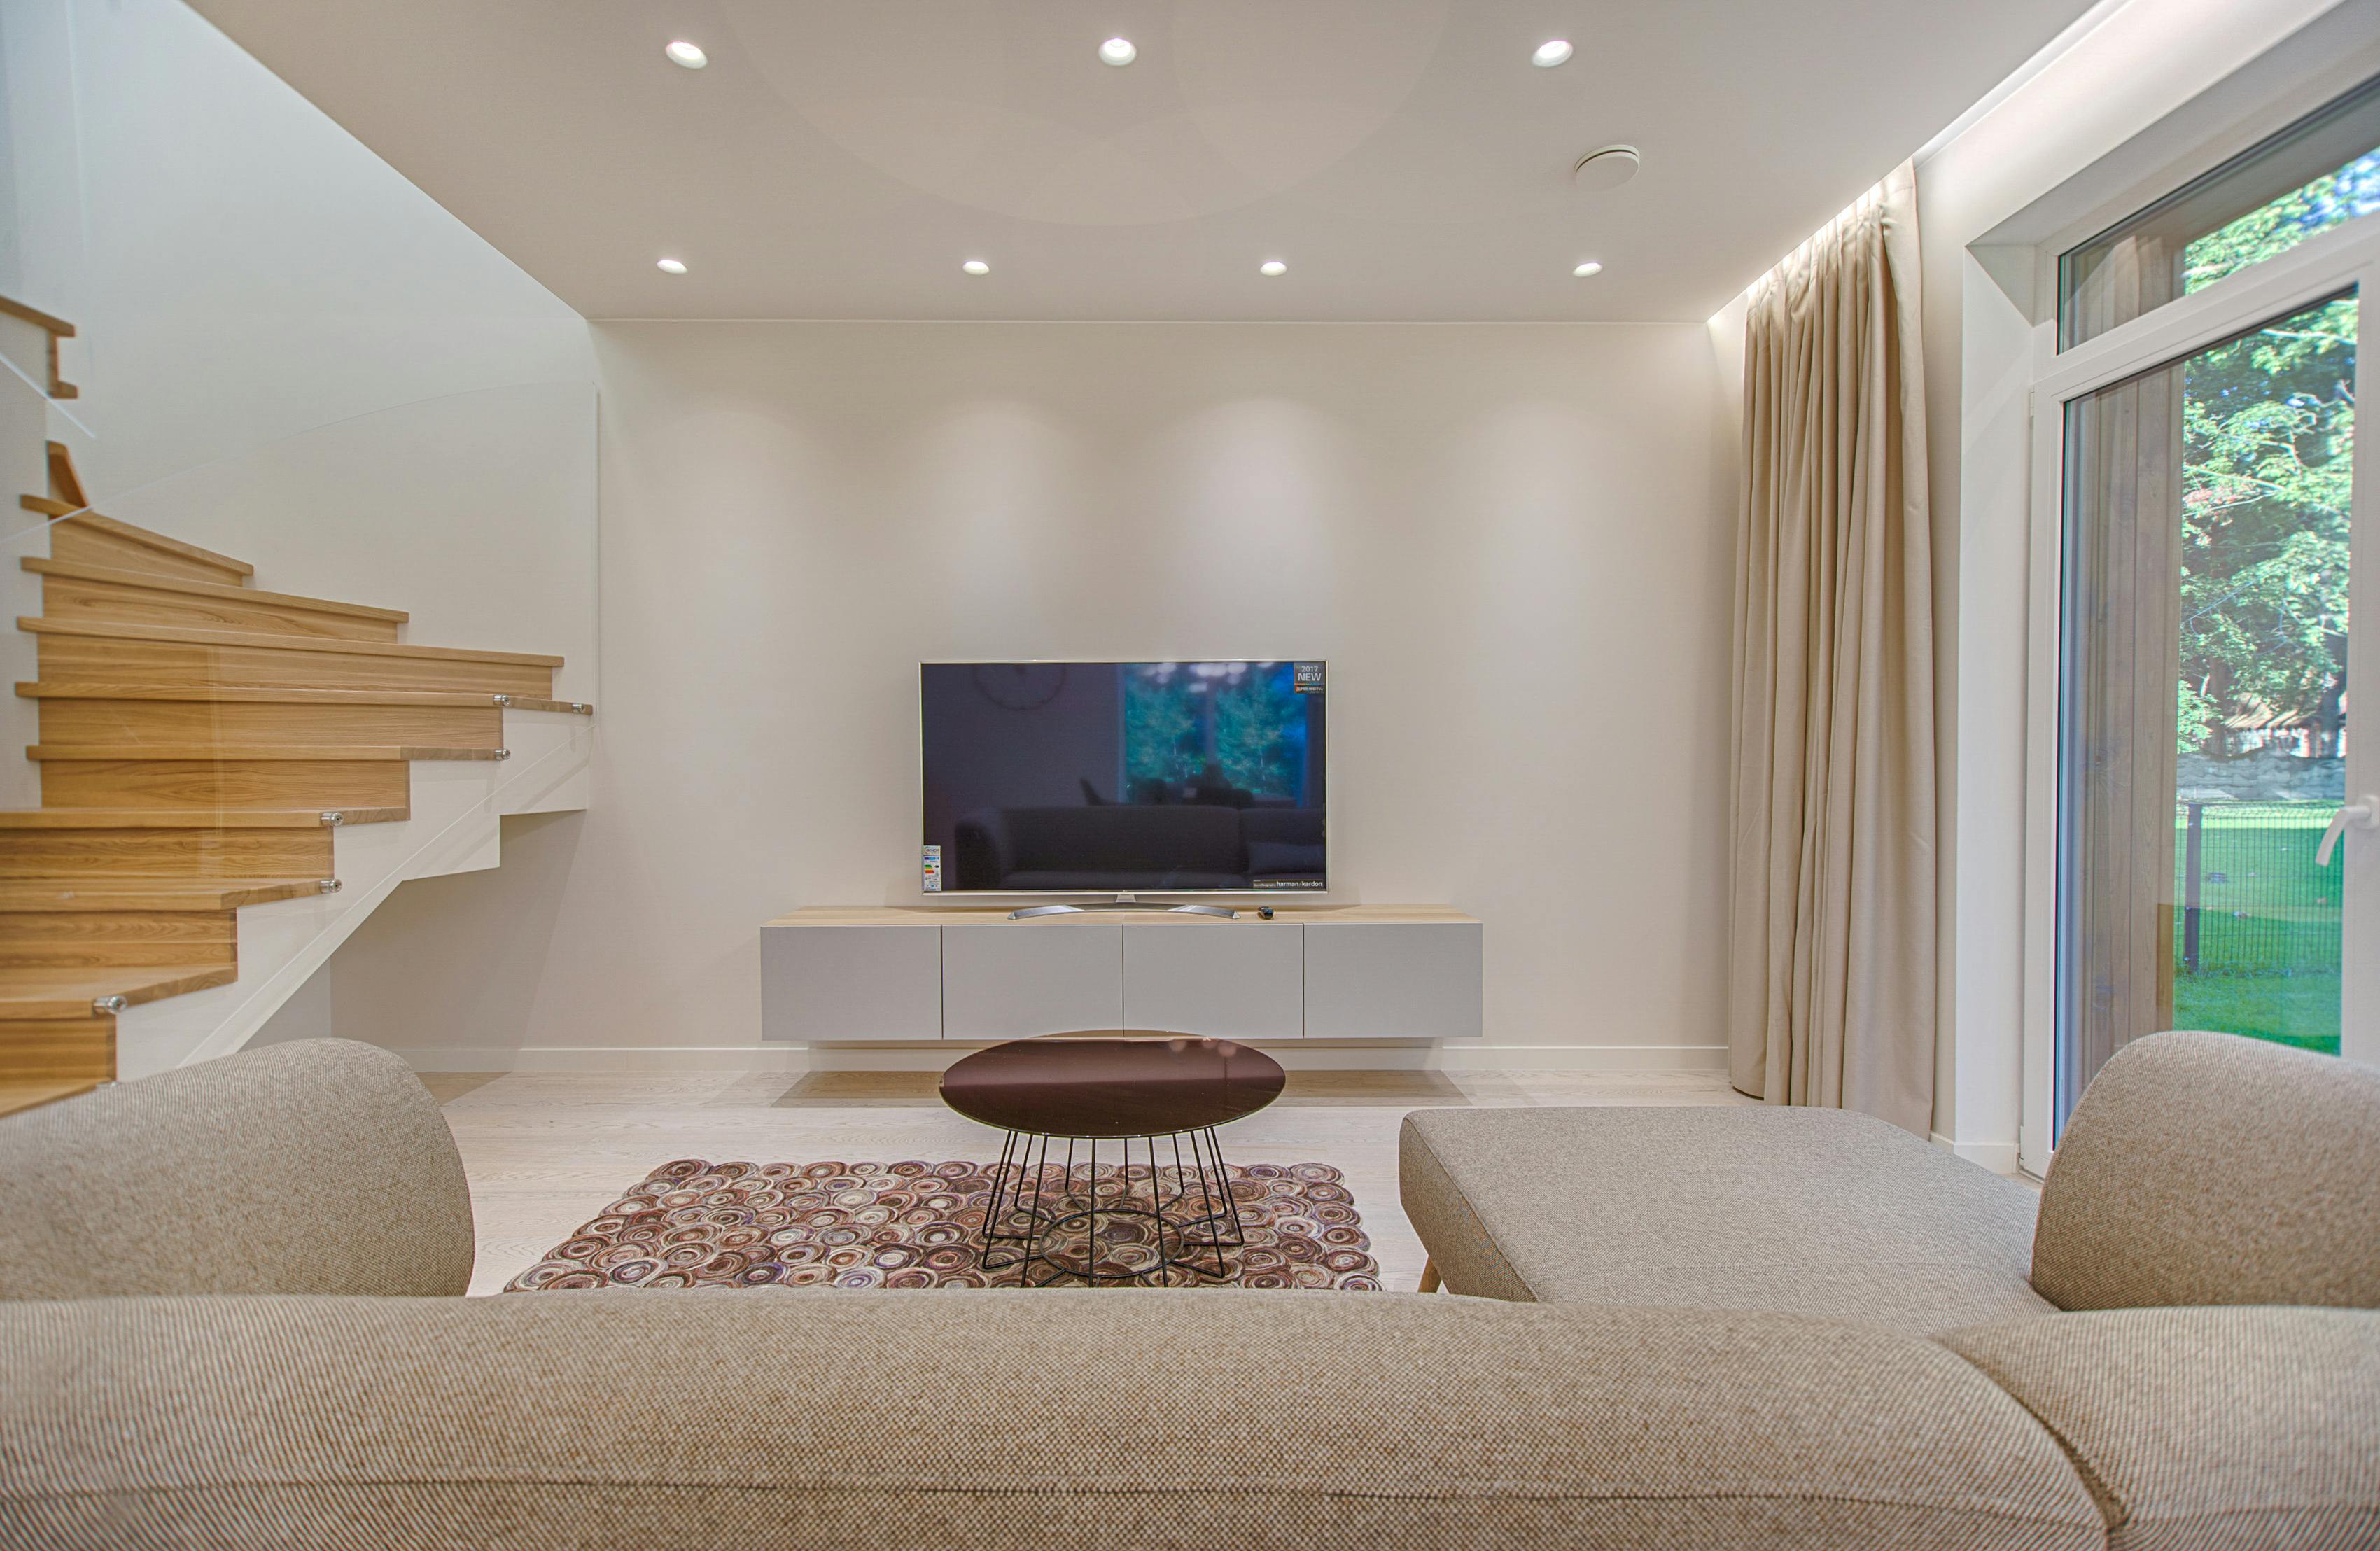 1000+ Beautiful Living Room Photos · Pexels · Free Stock ...